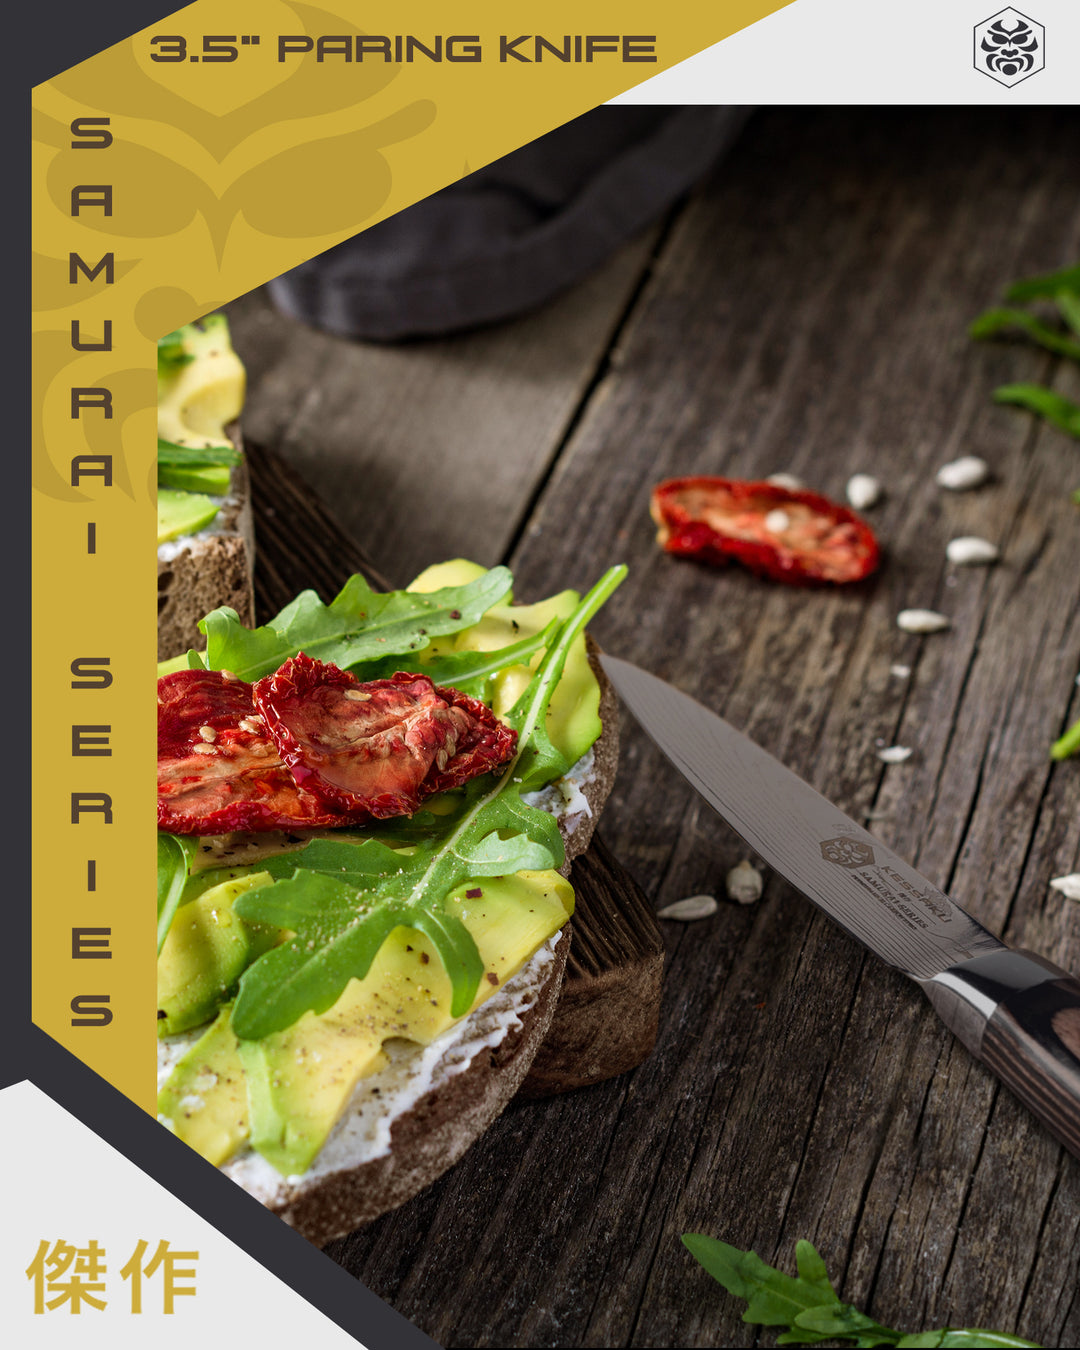 The Samurai Paring Knife with sliced avocado, leafy greens, sundried tomato on homemade wheat toast